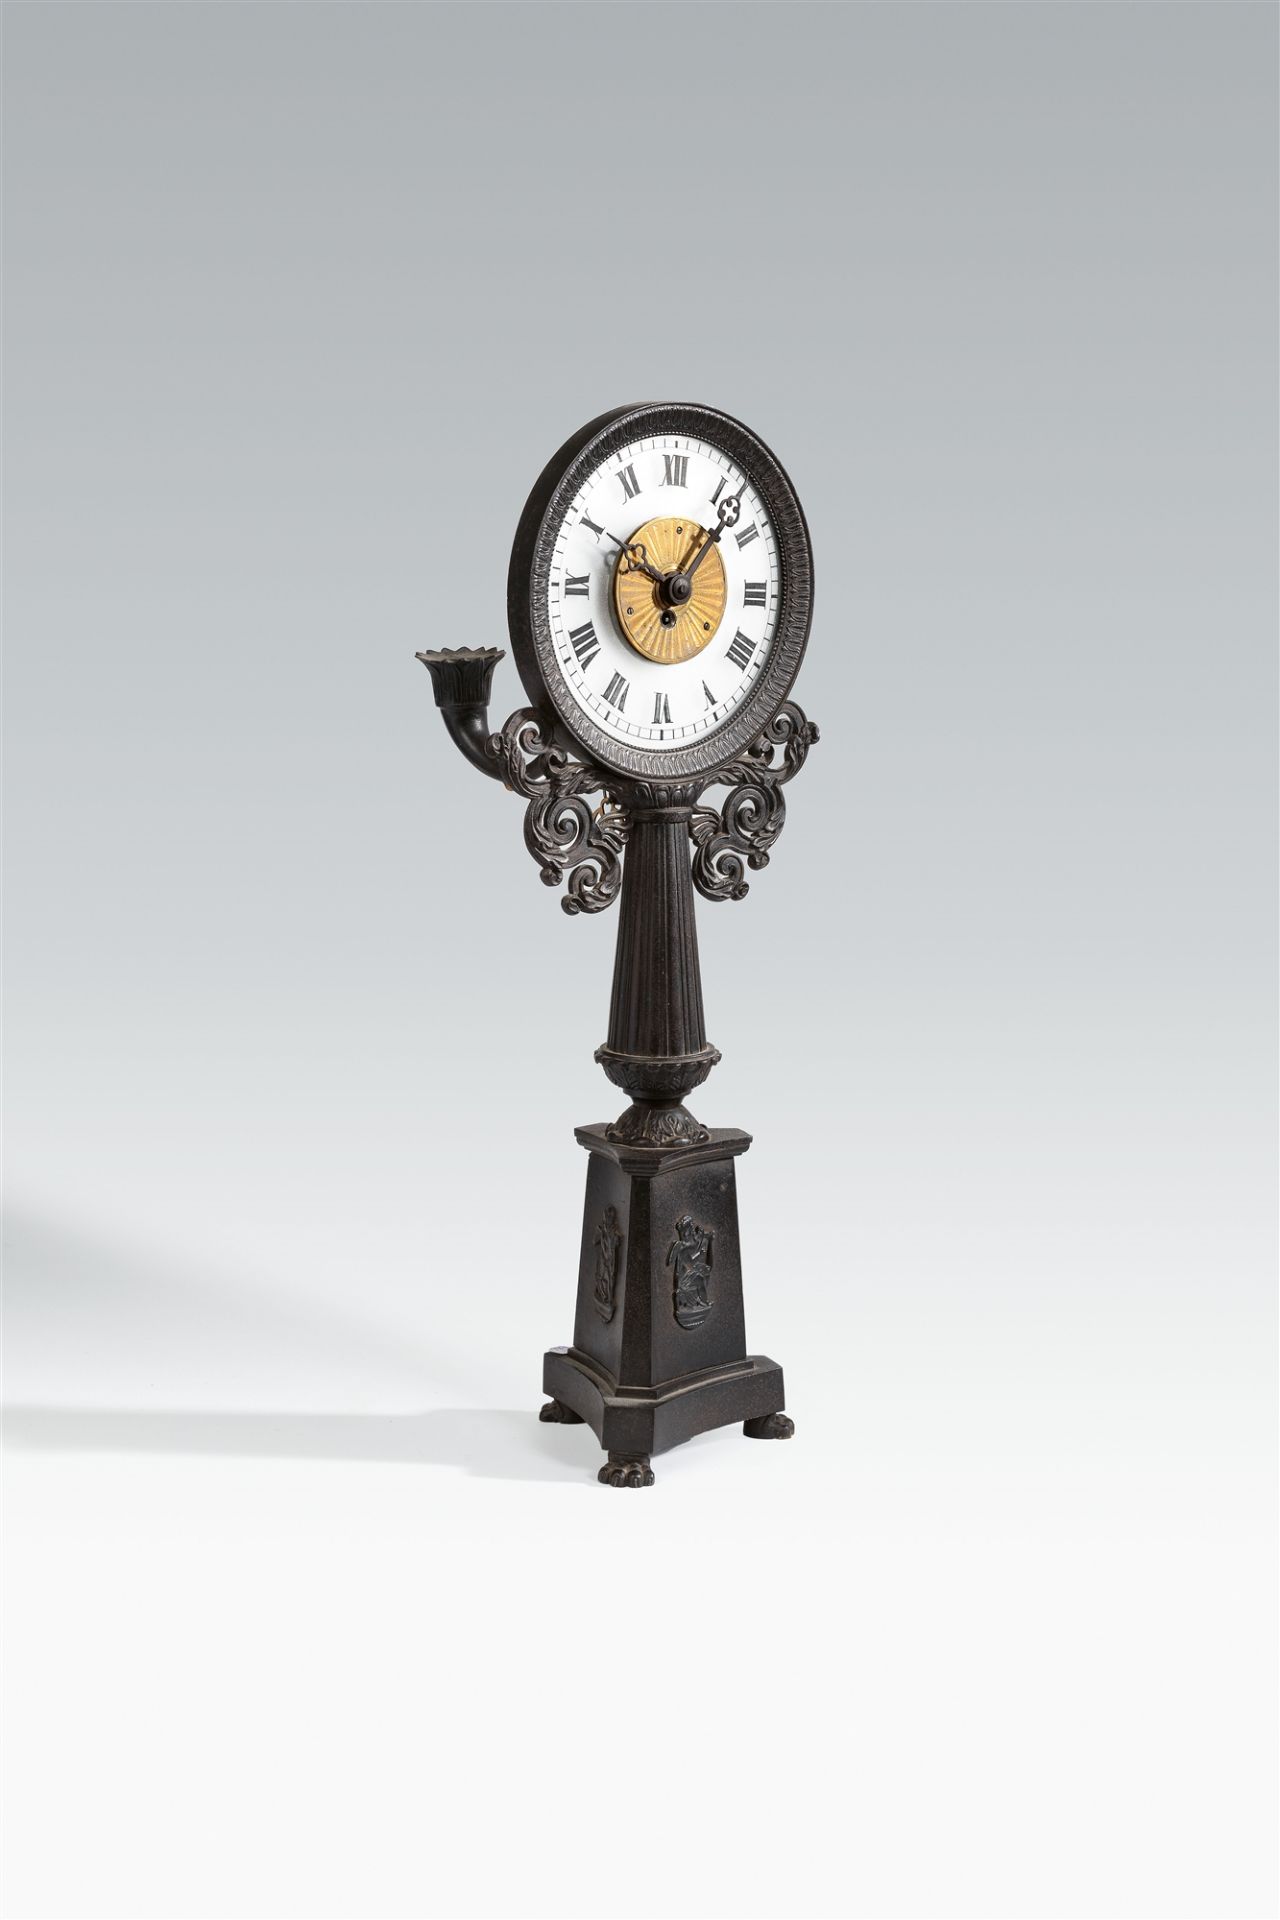 A cast iron night clock "Trespied" - Image 2 of 3